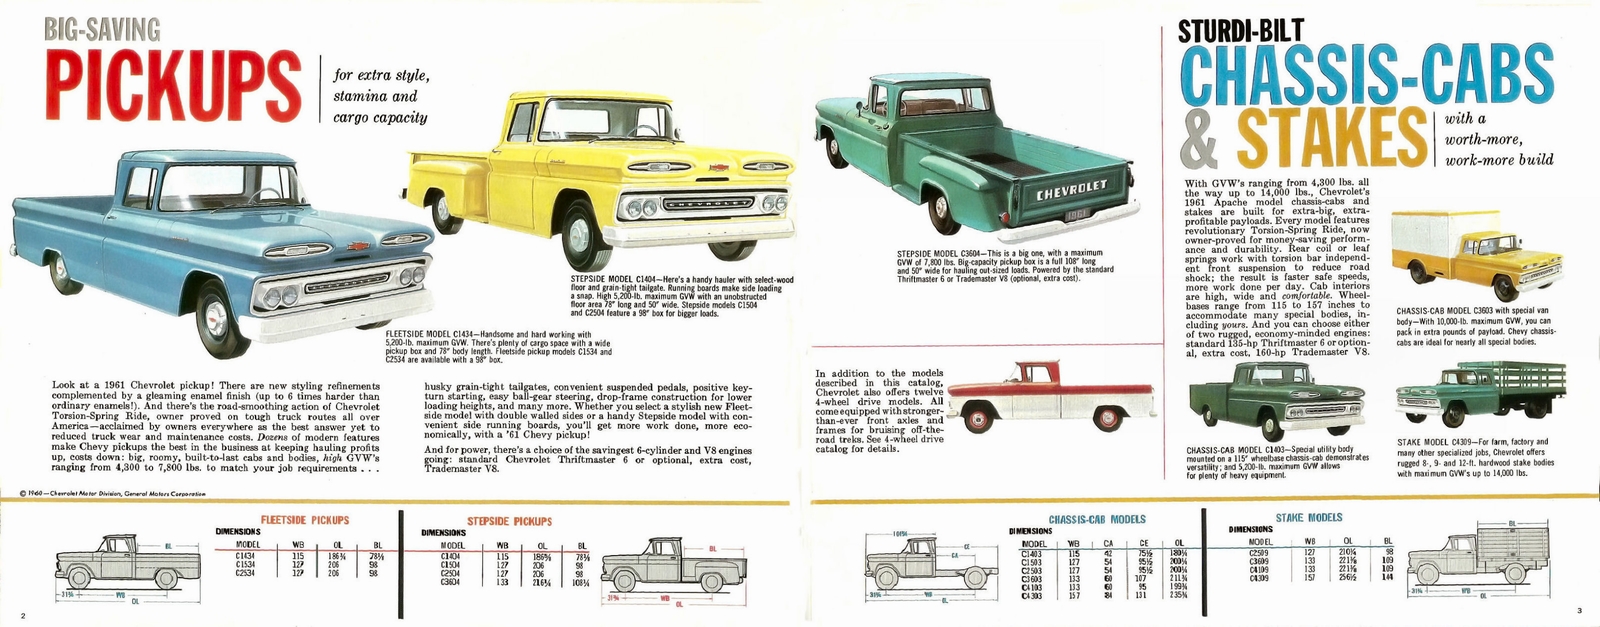 n_1961 Chevrolet Pickups-02-03.jpg